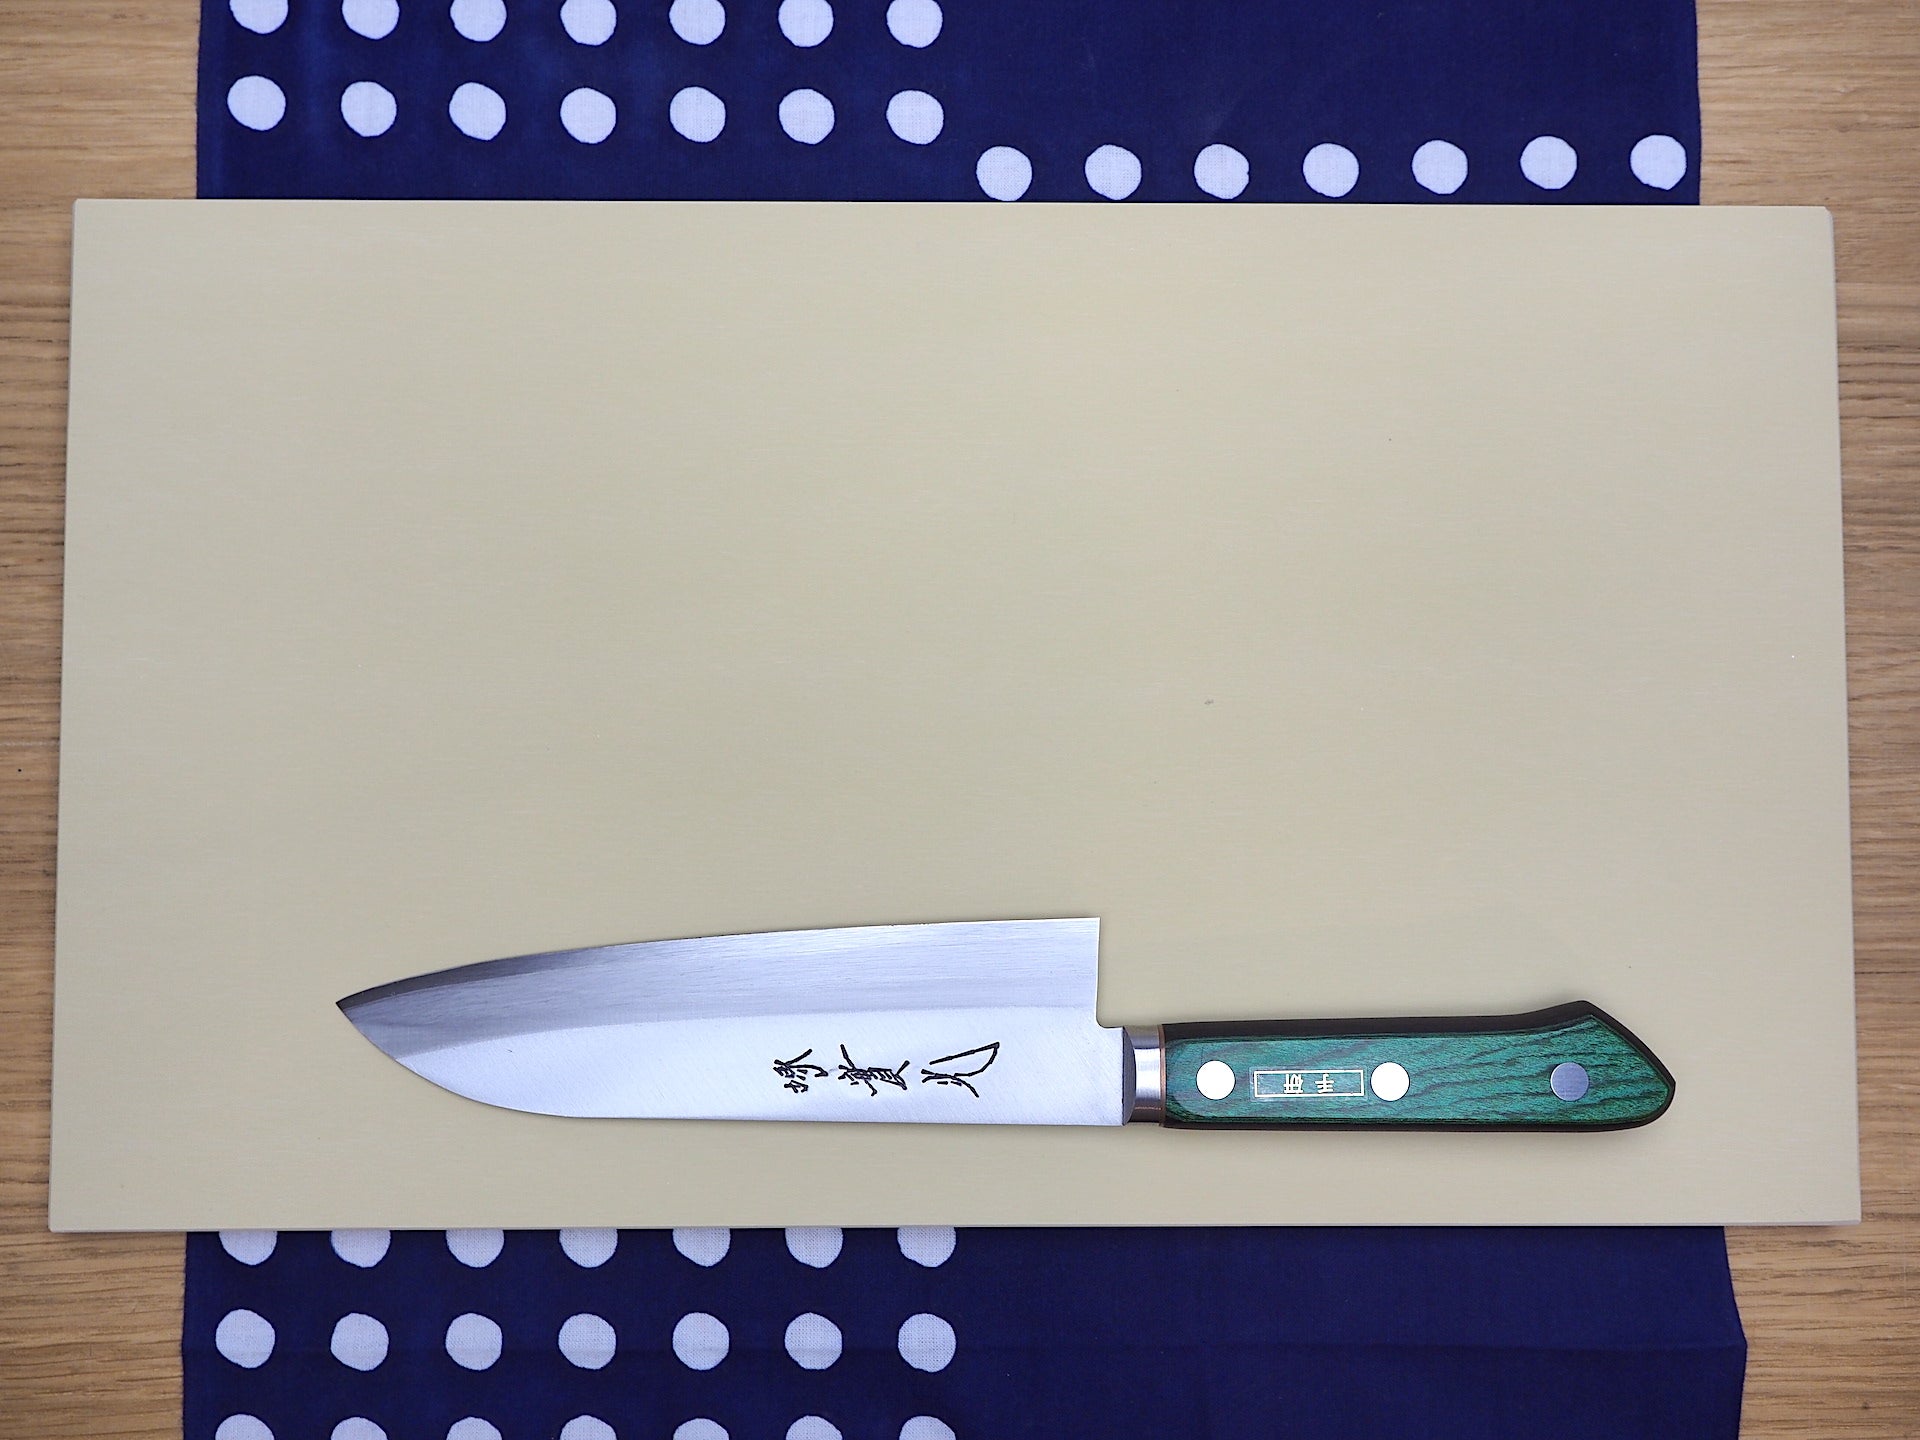 Rubber Cutting Board Asahi Cookin Cut Household M(Medium Beige)